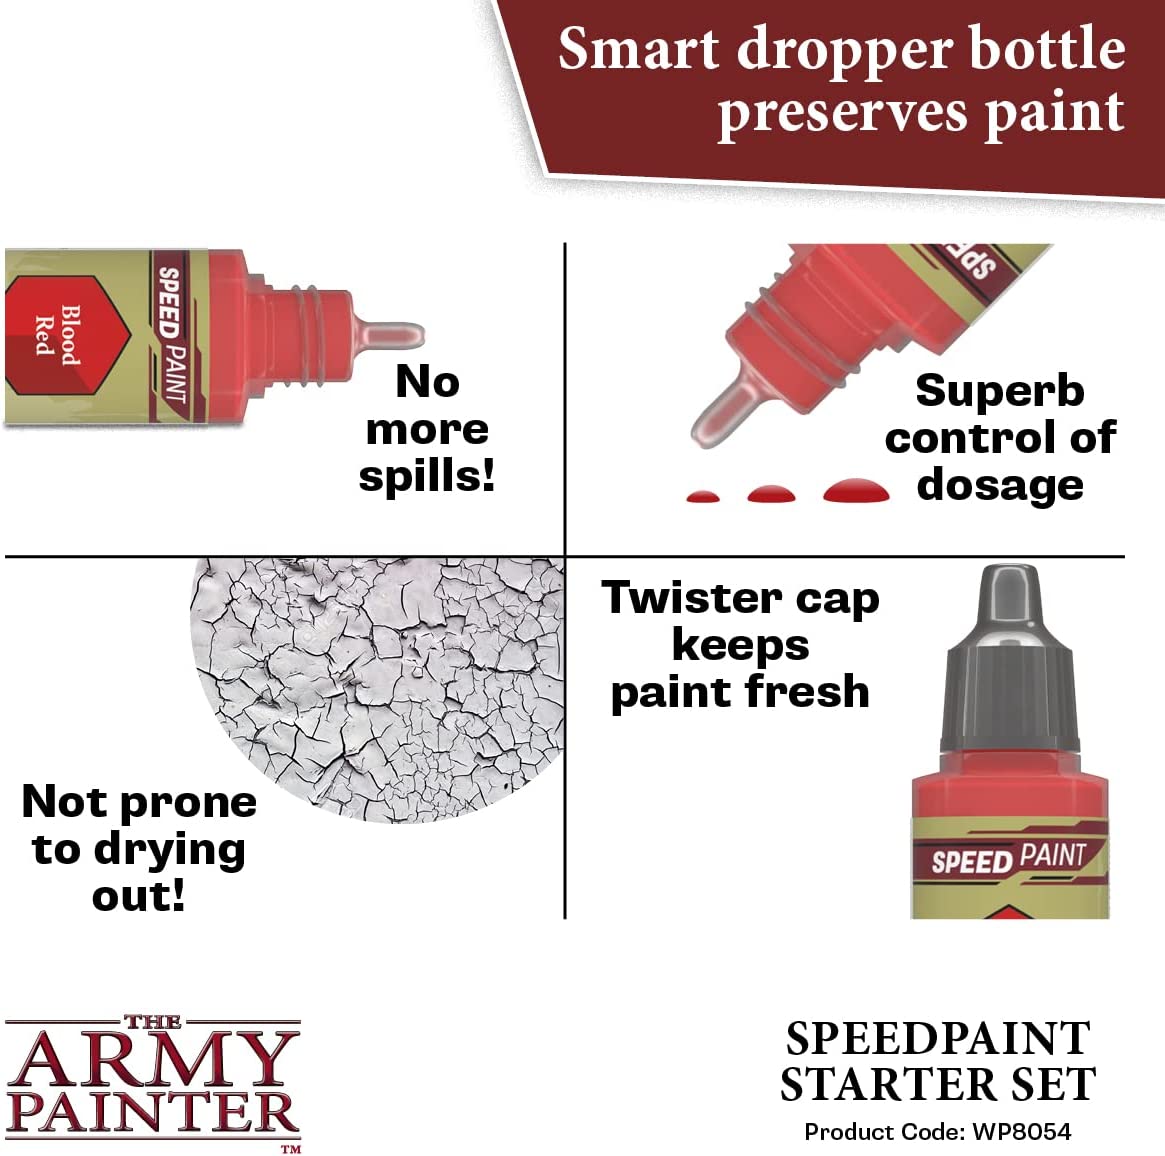 The Army Painter - Speedpaint Starter Set with Free Bonus Item